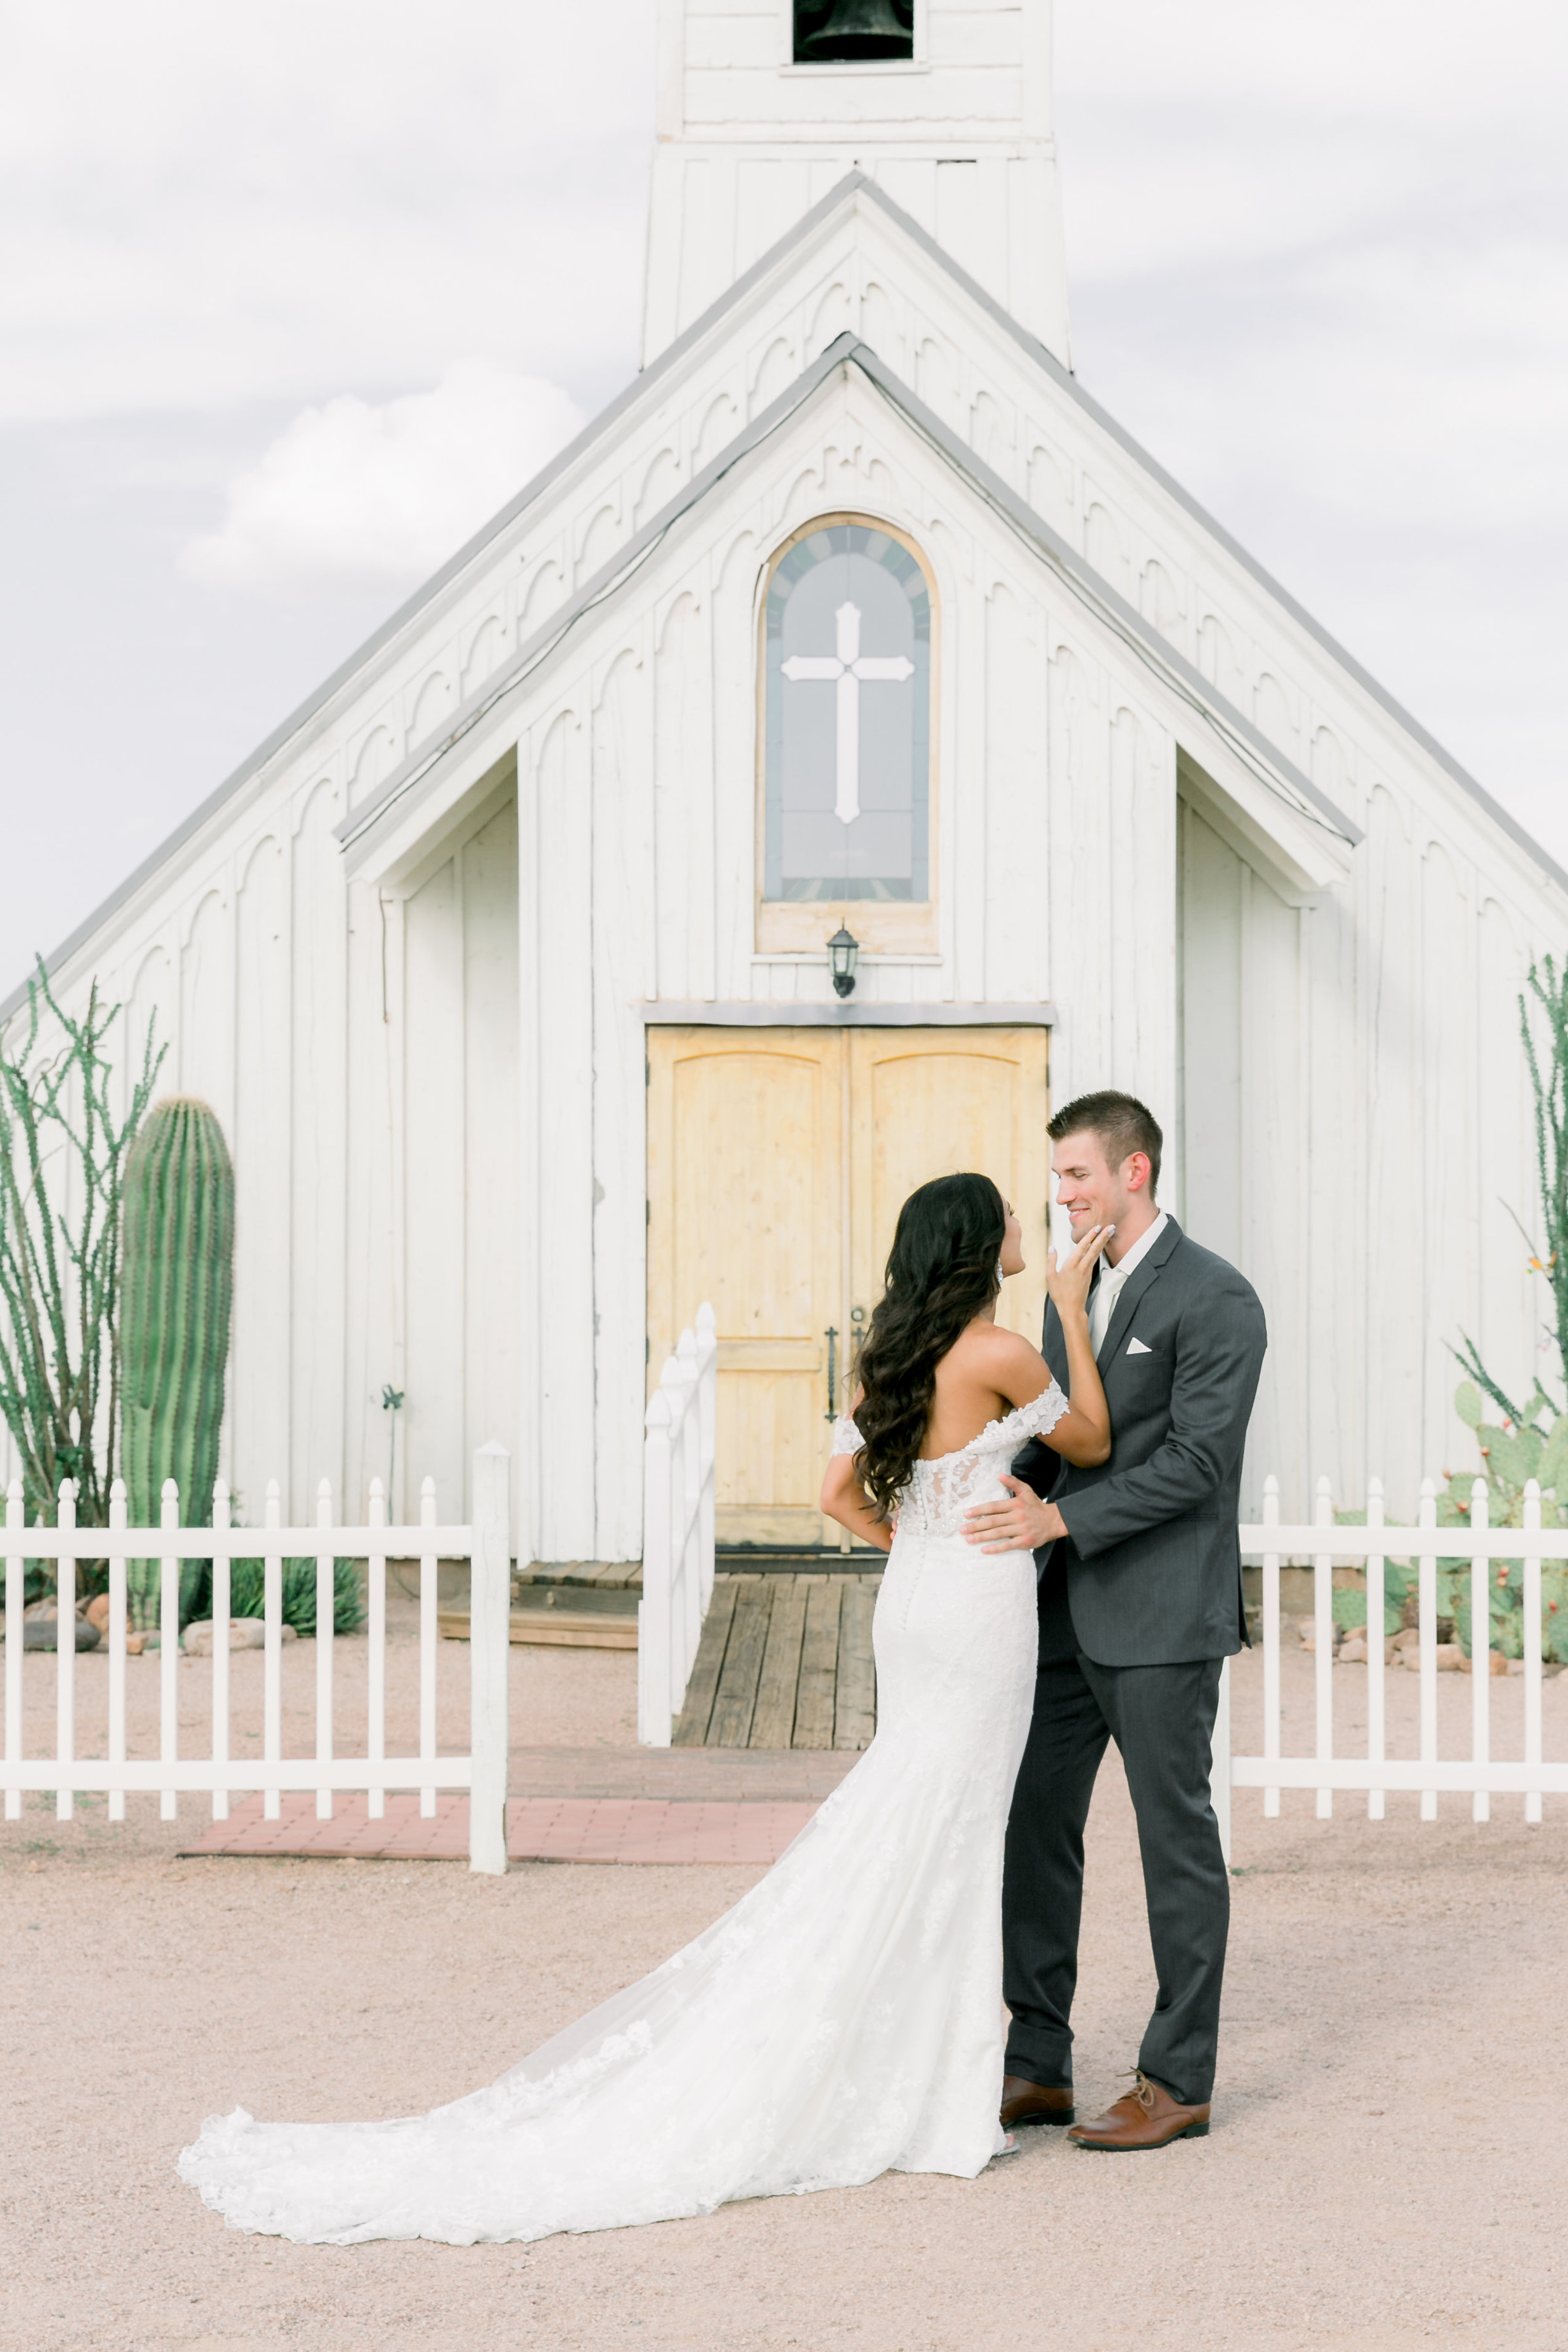 Karlie Colleen Photography - Arizona Wedding - The Paseo Venue - Jackie & Ryan -102